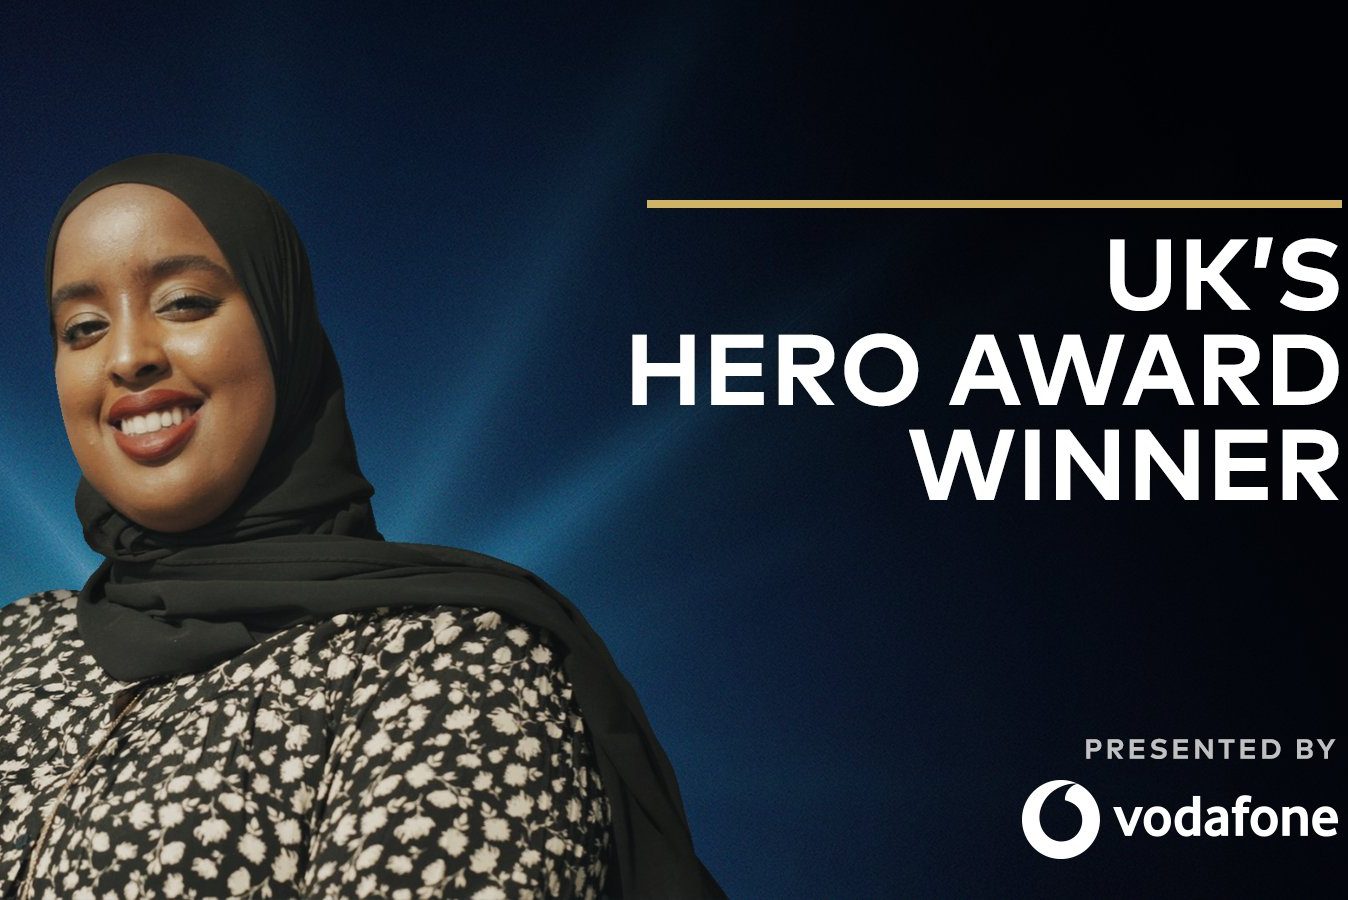 Fatima Ibrahim Global Citizen Prize UK's Hero Award Winner